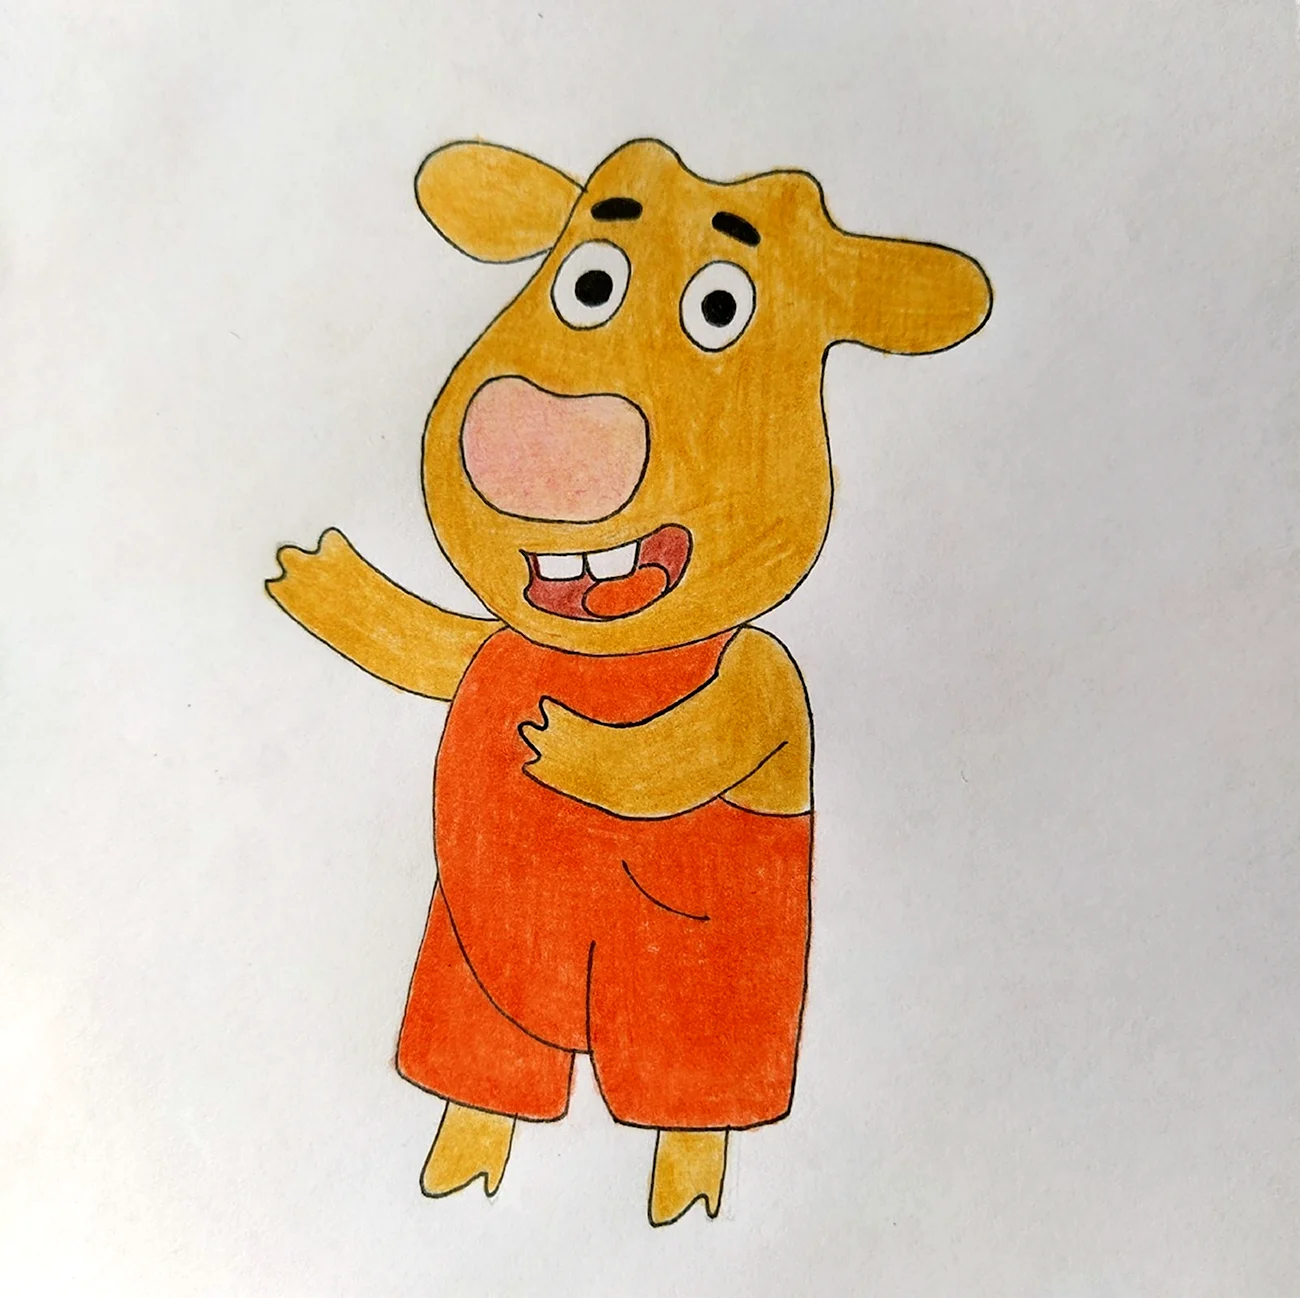 Оранжевая корова Деда Харитон. Картинка из мультфильма